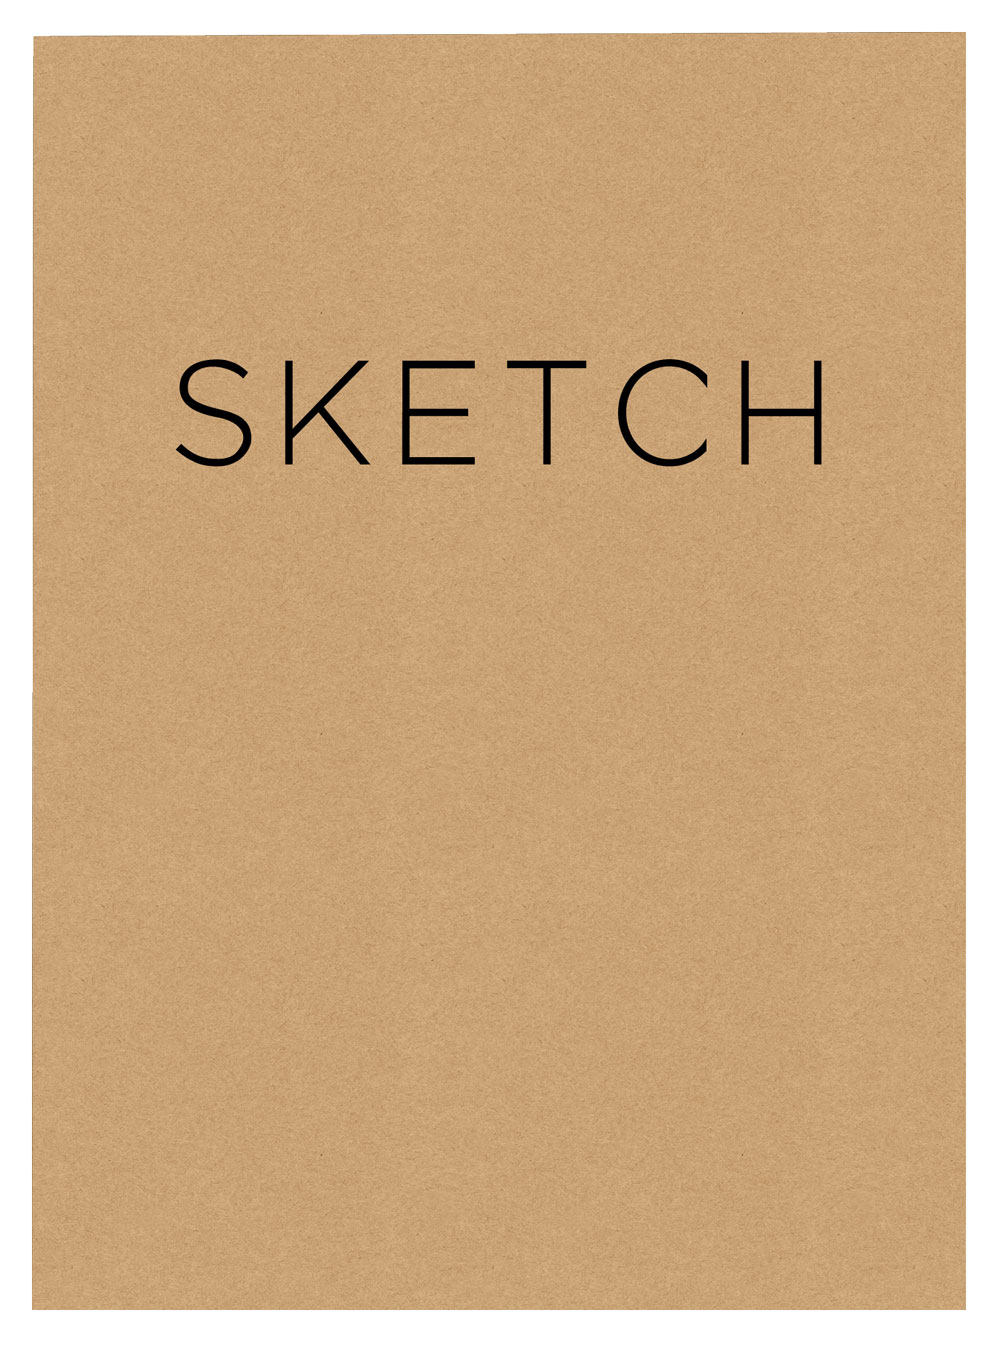 Blank Sketchbook 8x 11.41 Black- Piccadilly